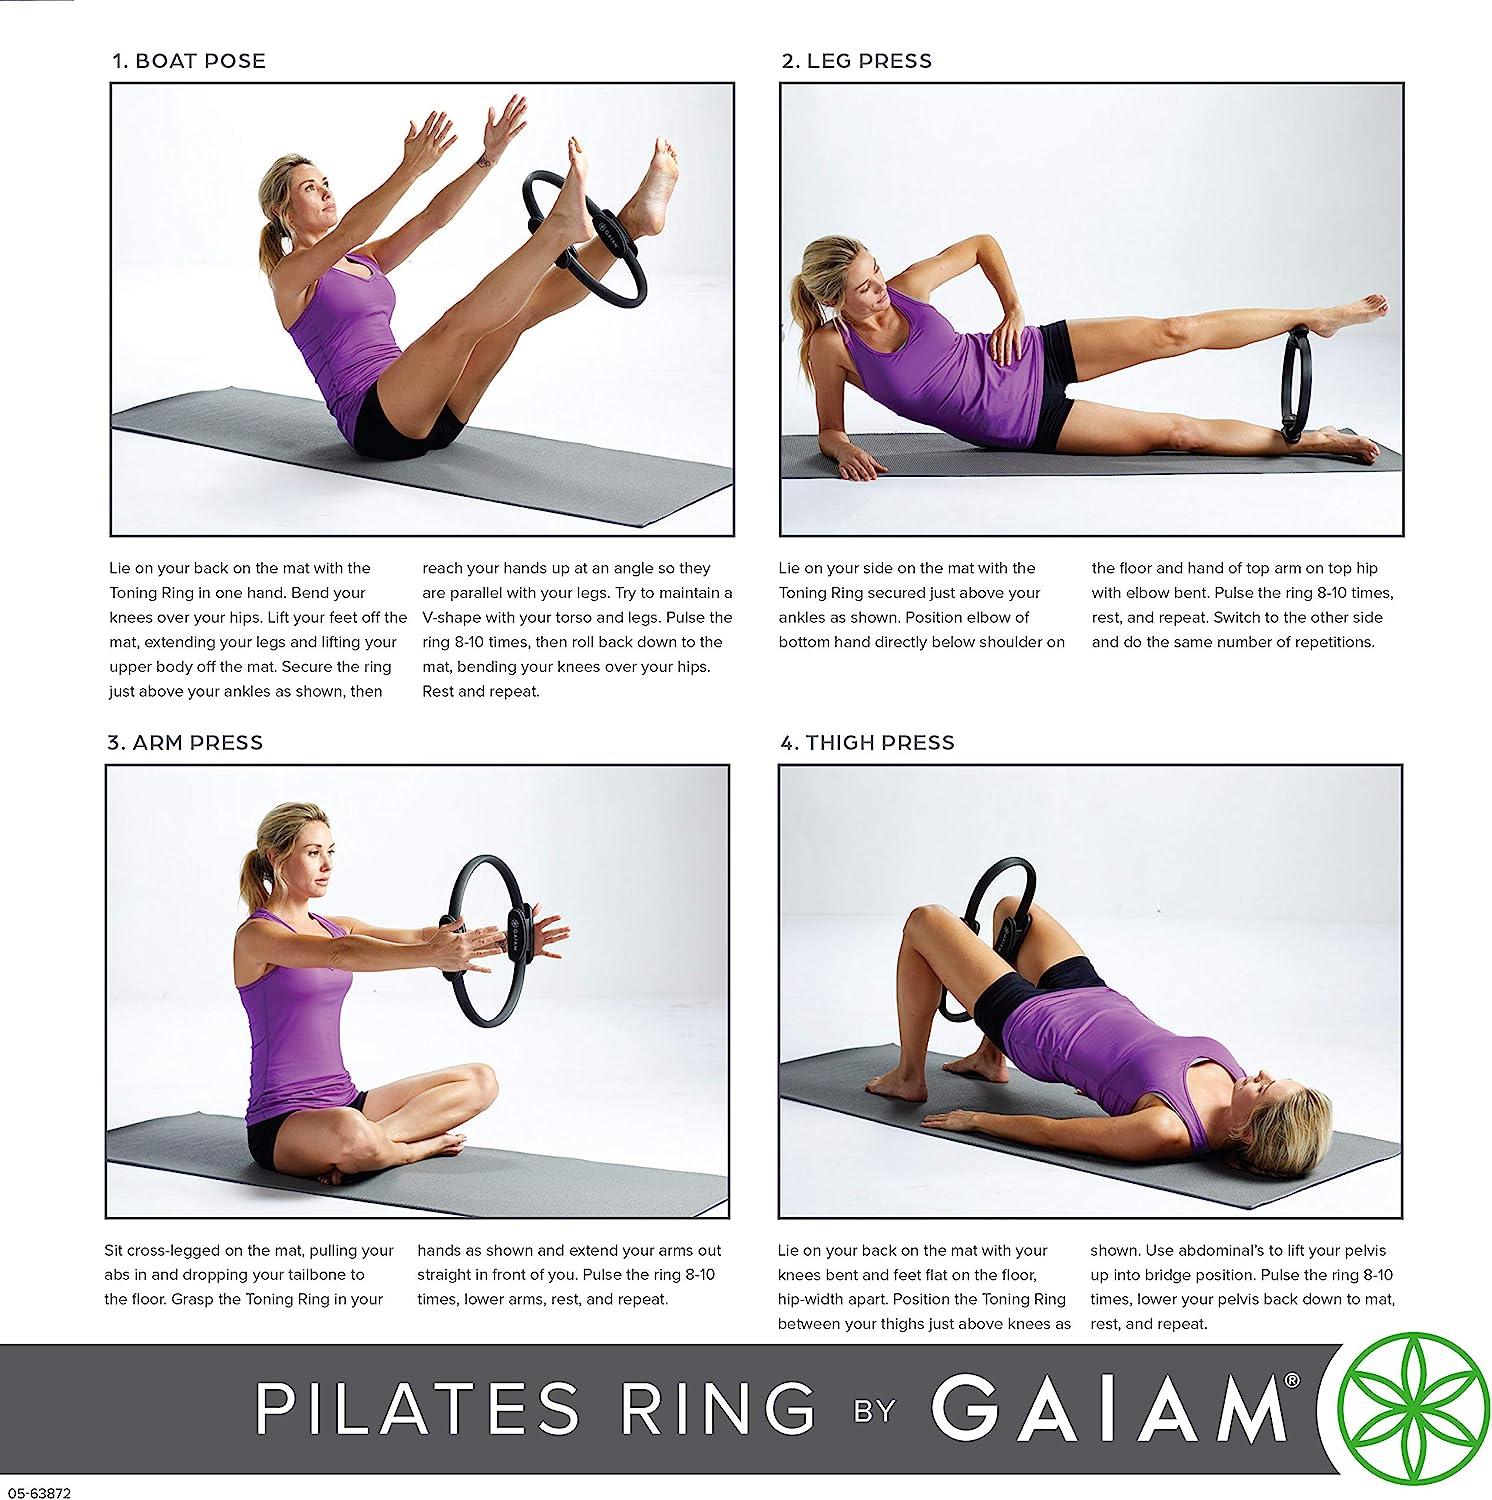 Pilates Ring